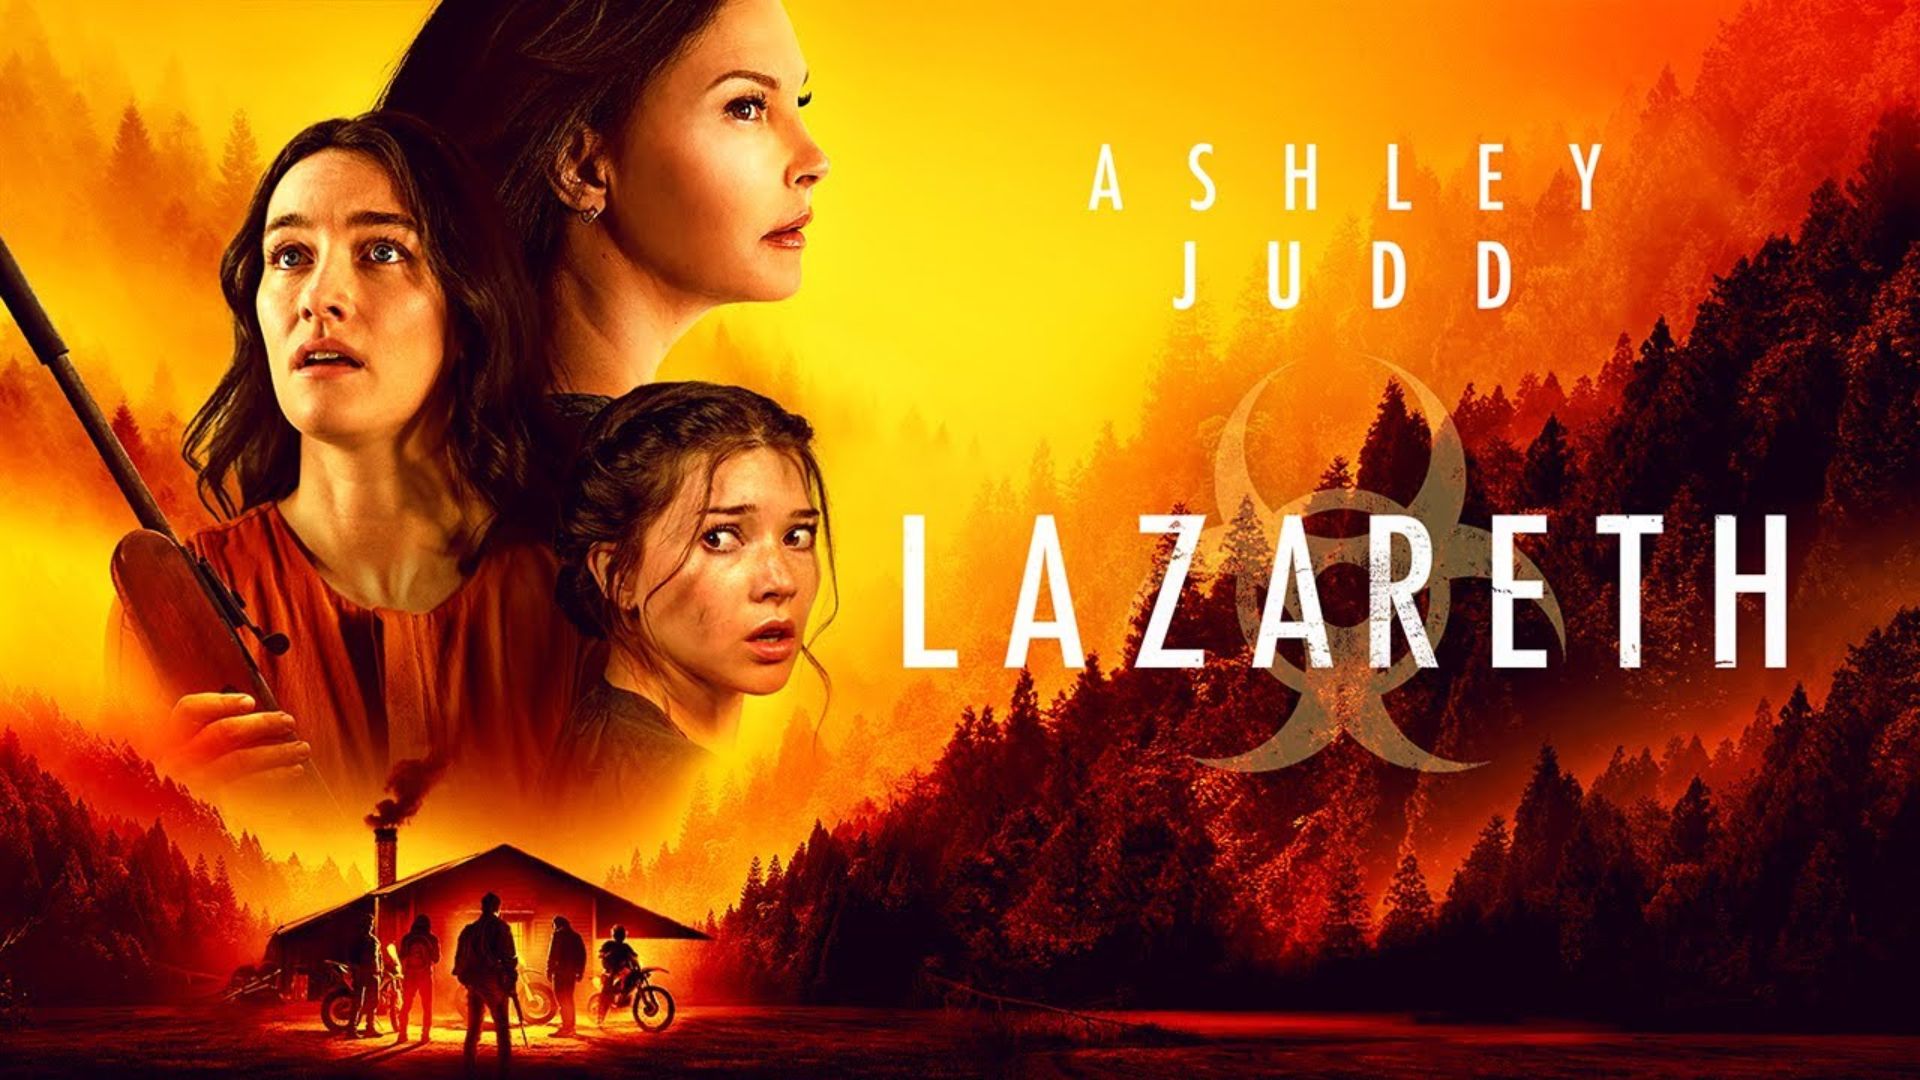 Lazareth trailer